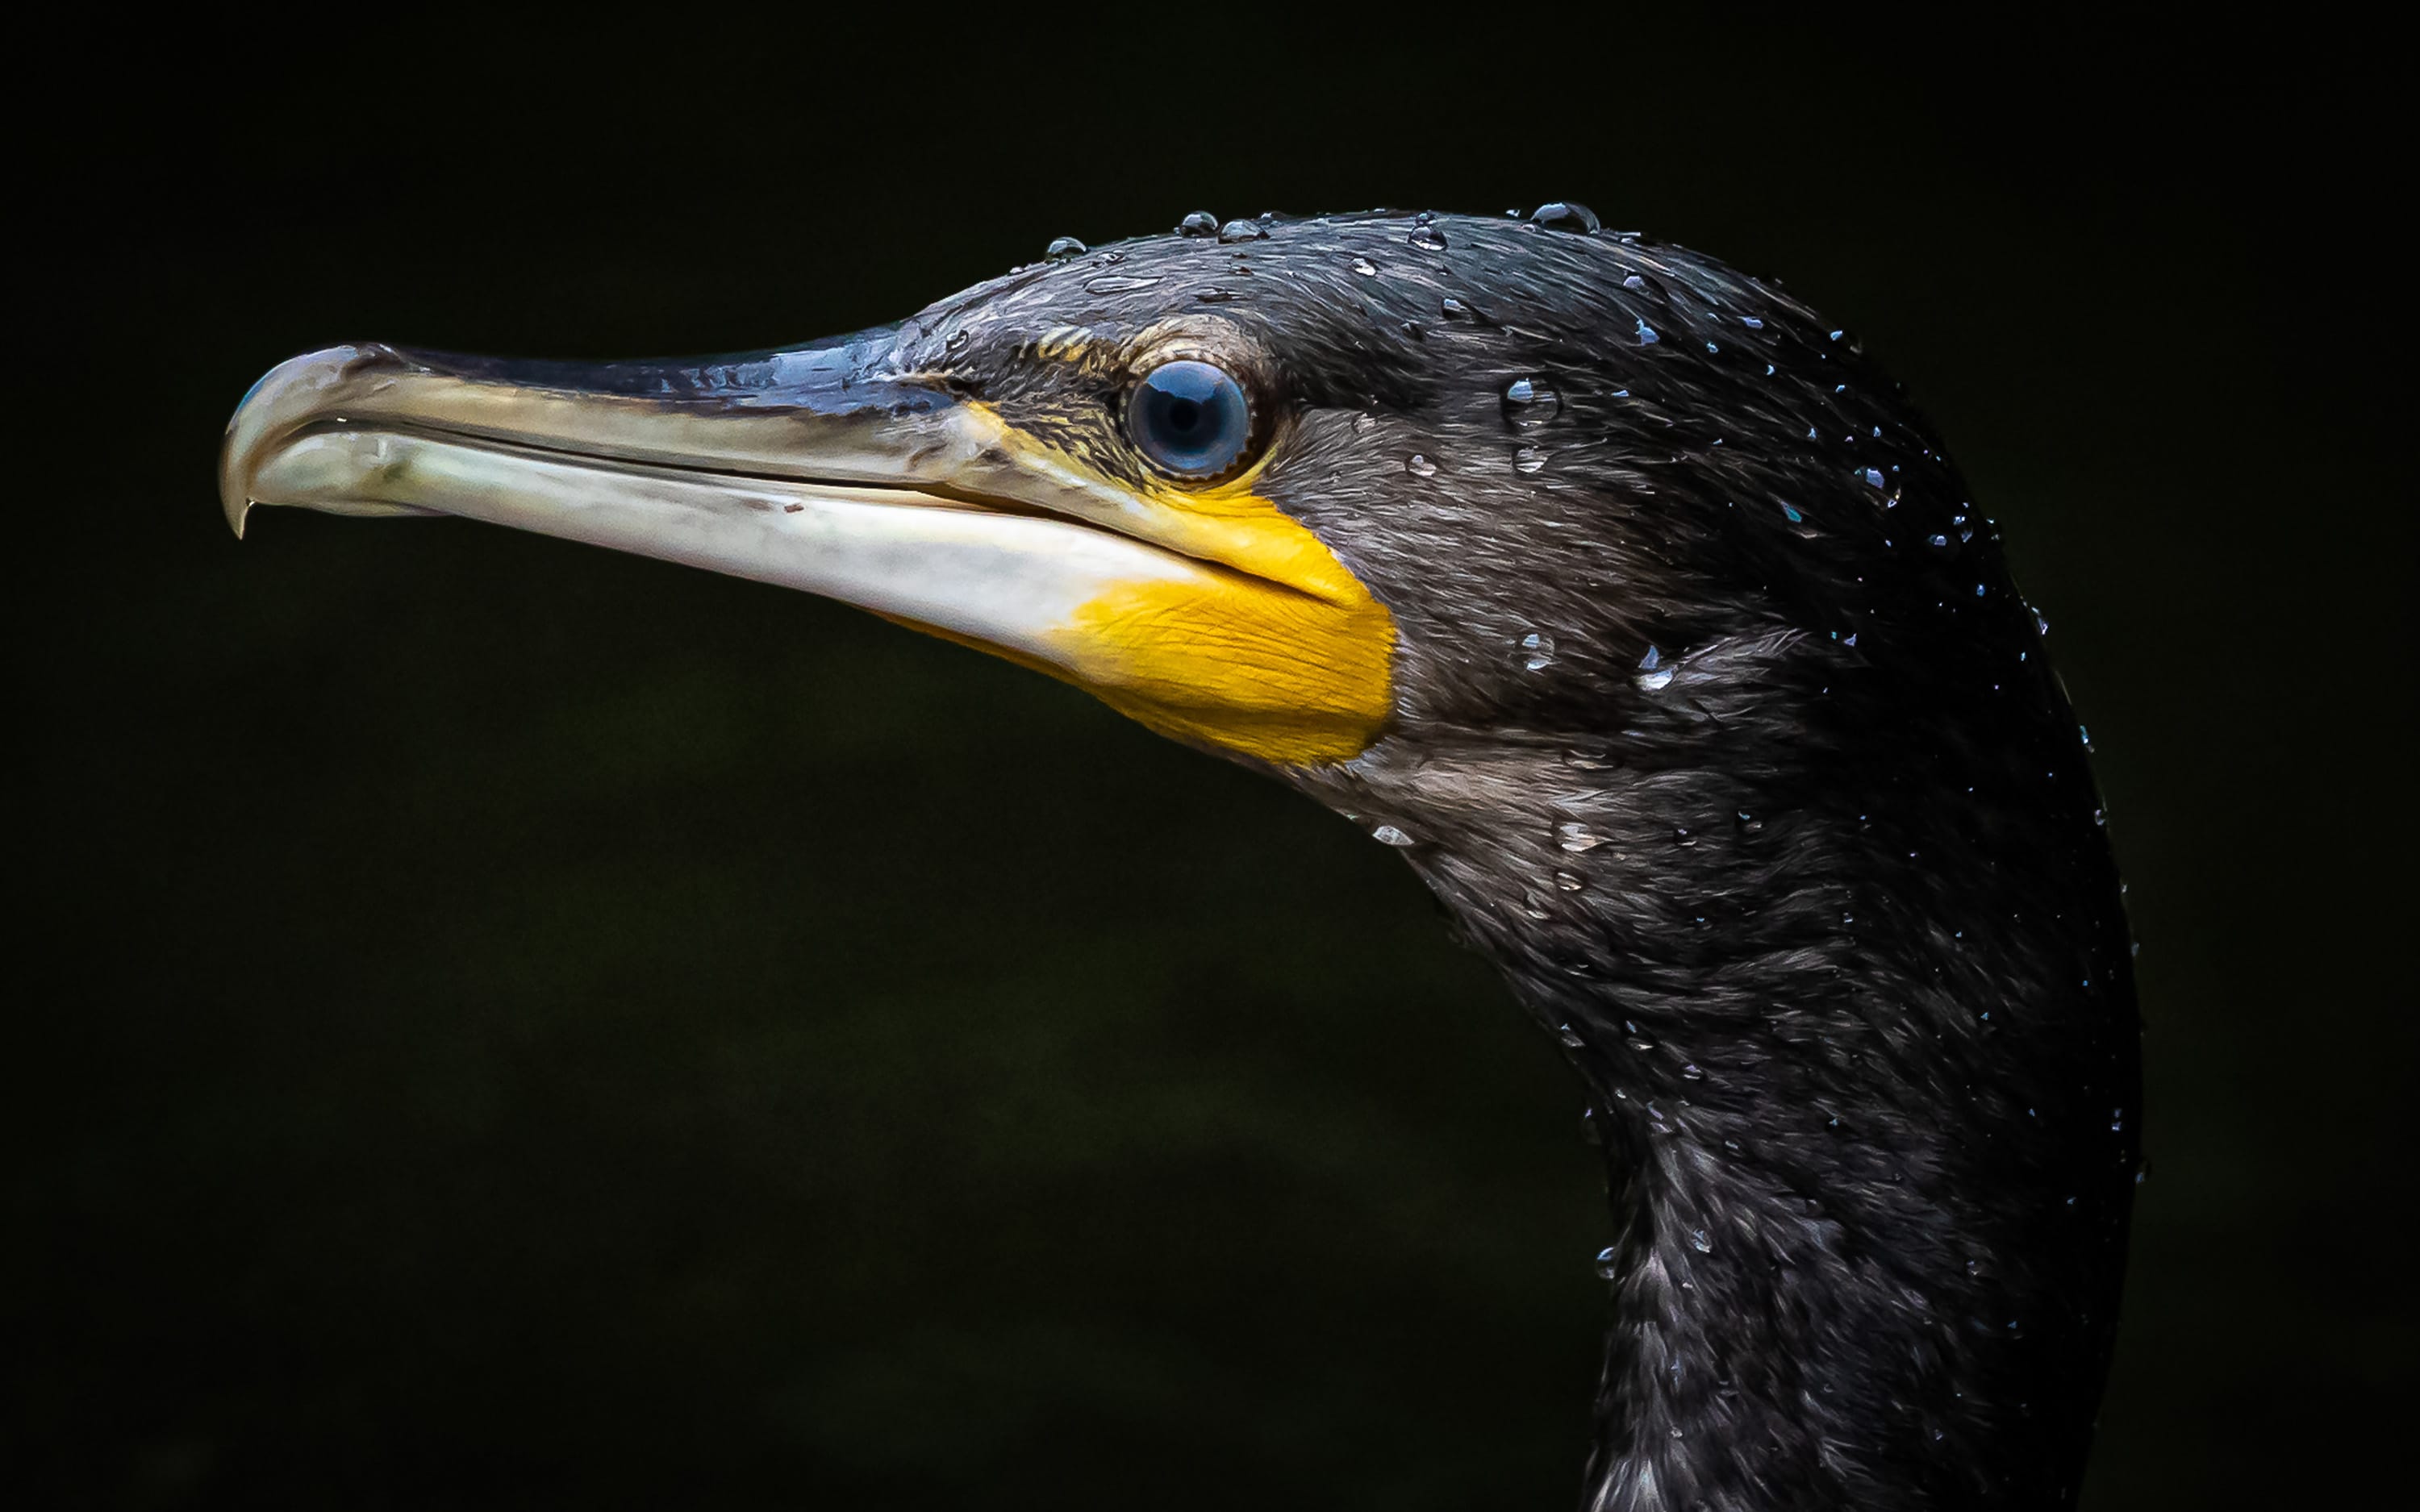 Photographing New Zealand native birds